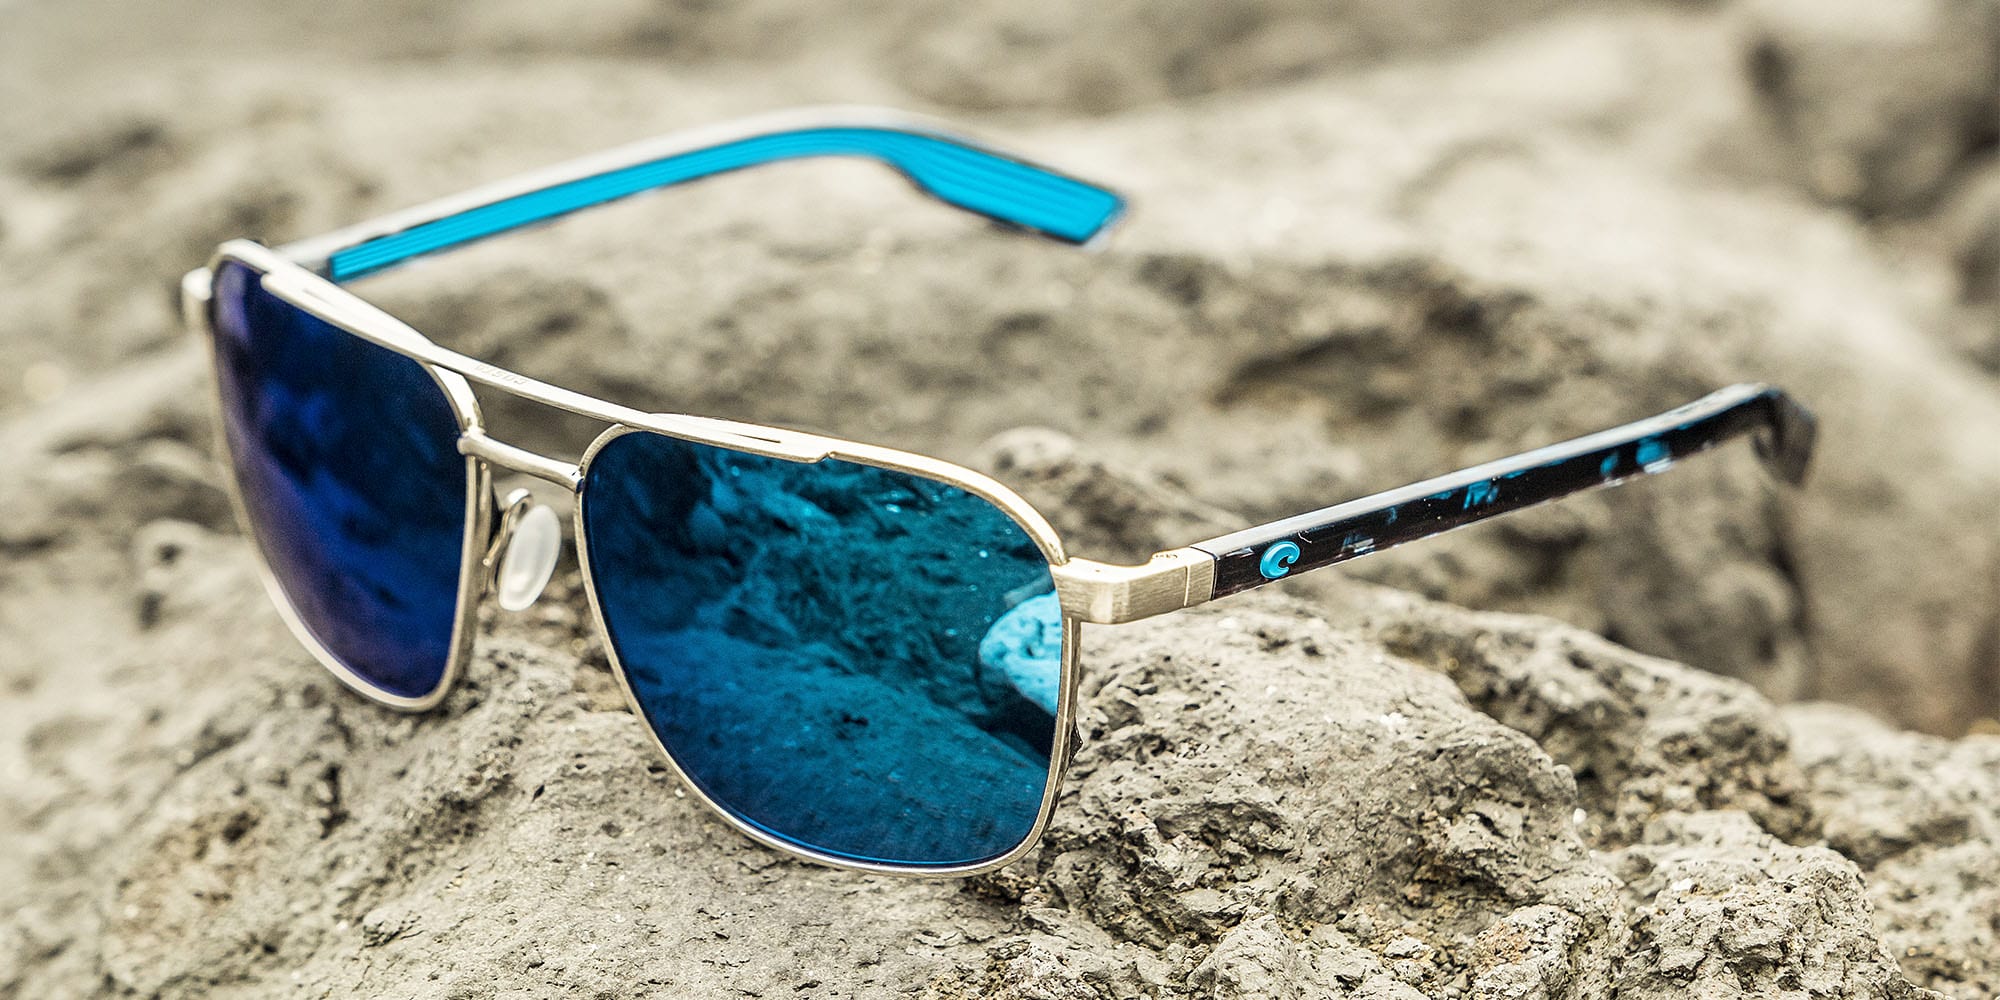 https://media.costadelmar.com/images/lifestyle/wader/costa-wader-sunglasses-on-surface.jpg